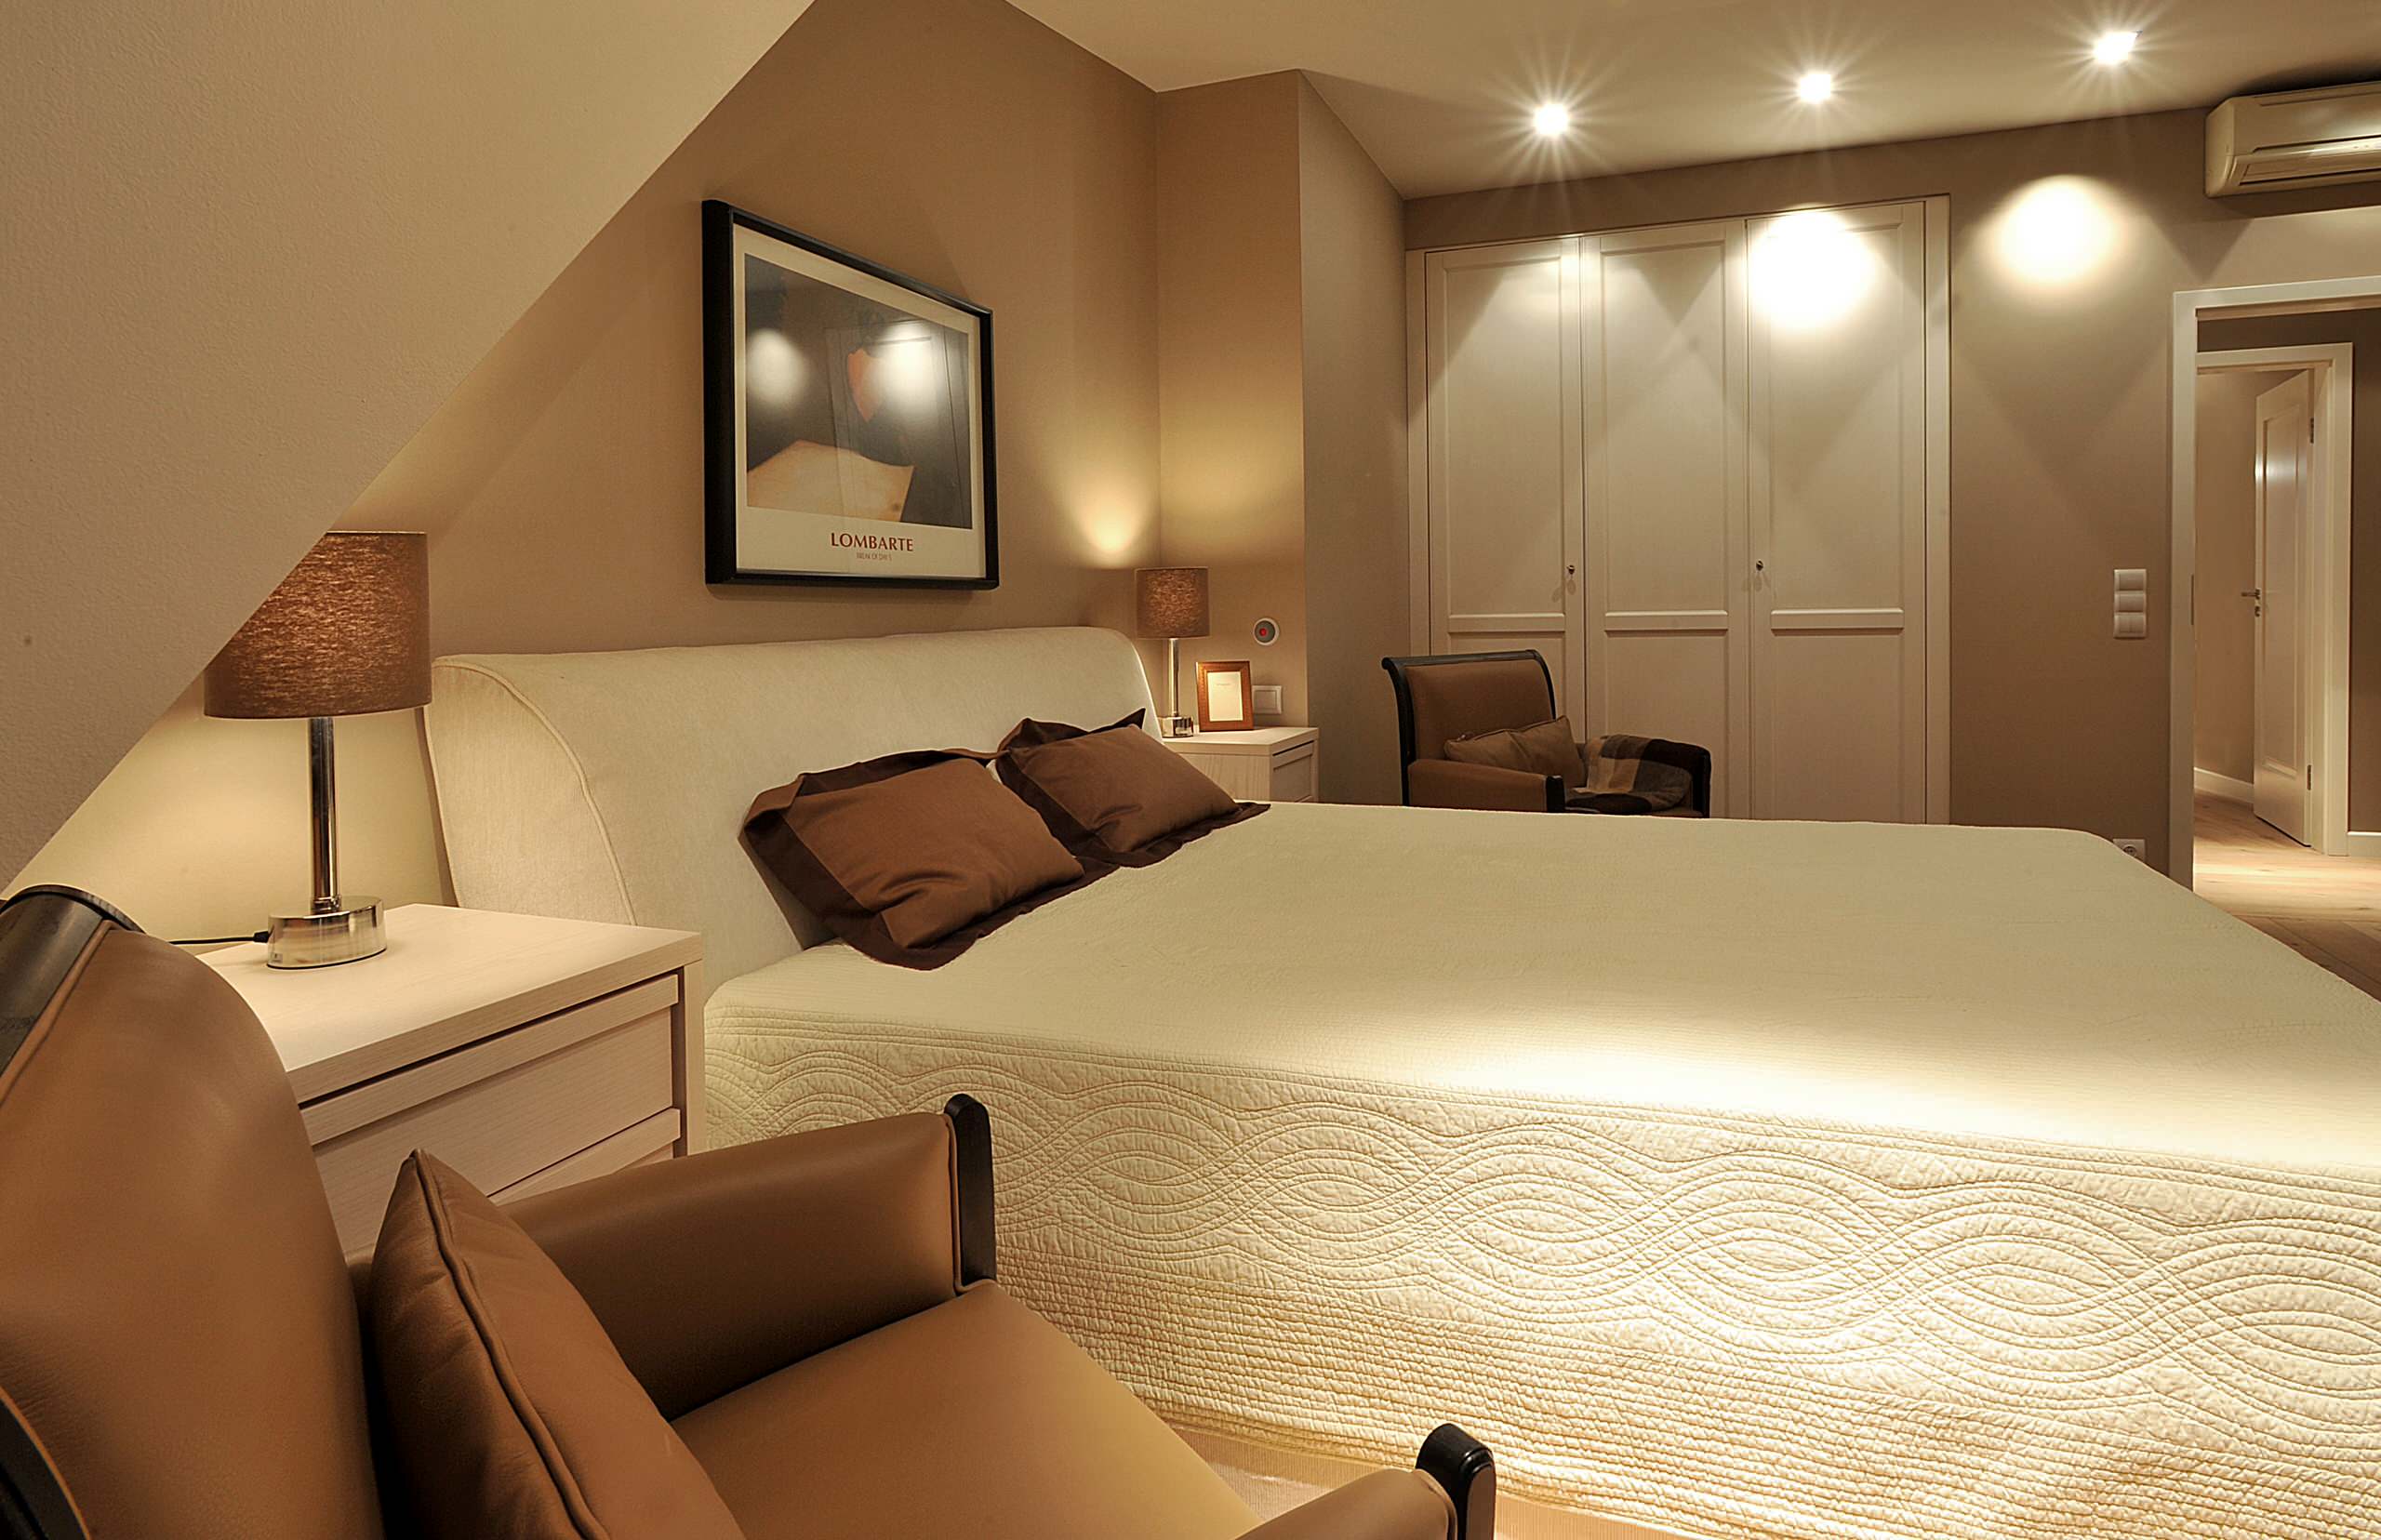 Basement Bedrooms: Designing A Comfortable Sleep Space Underground